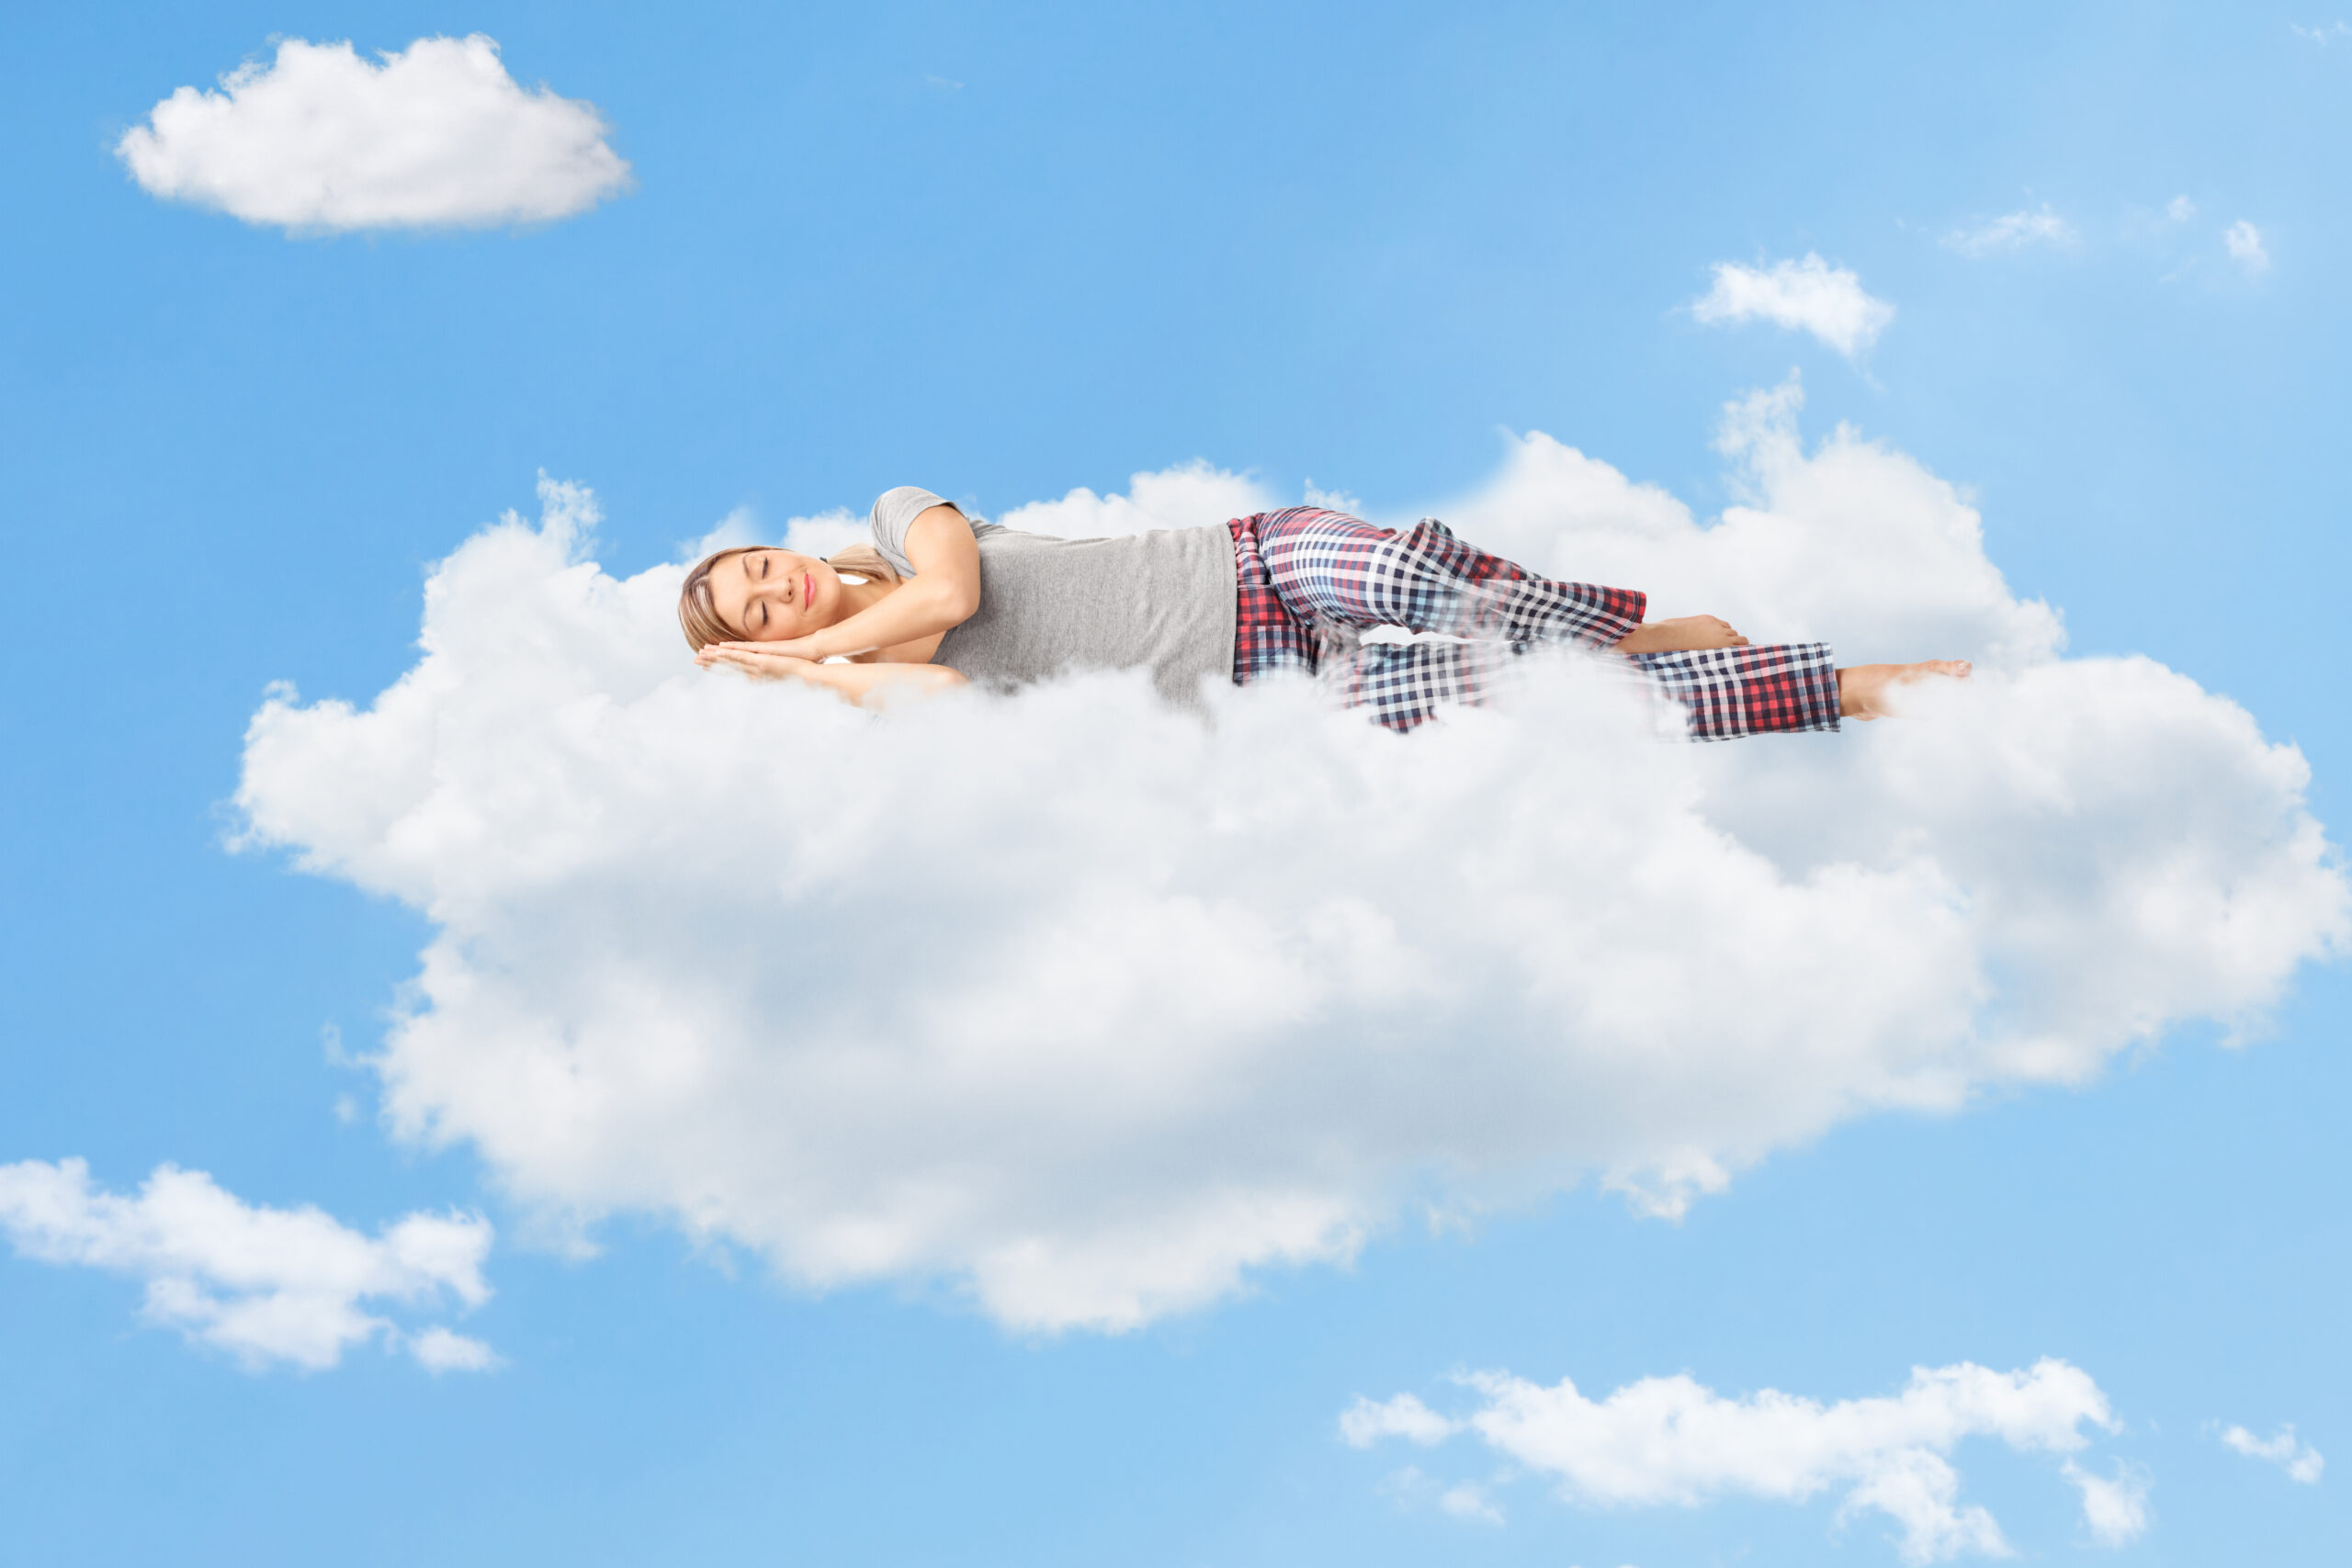 Woman sleeping peacefully on a cloud